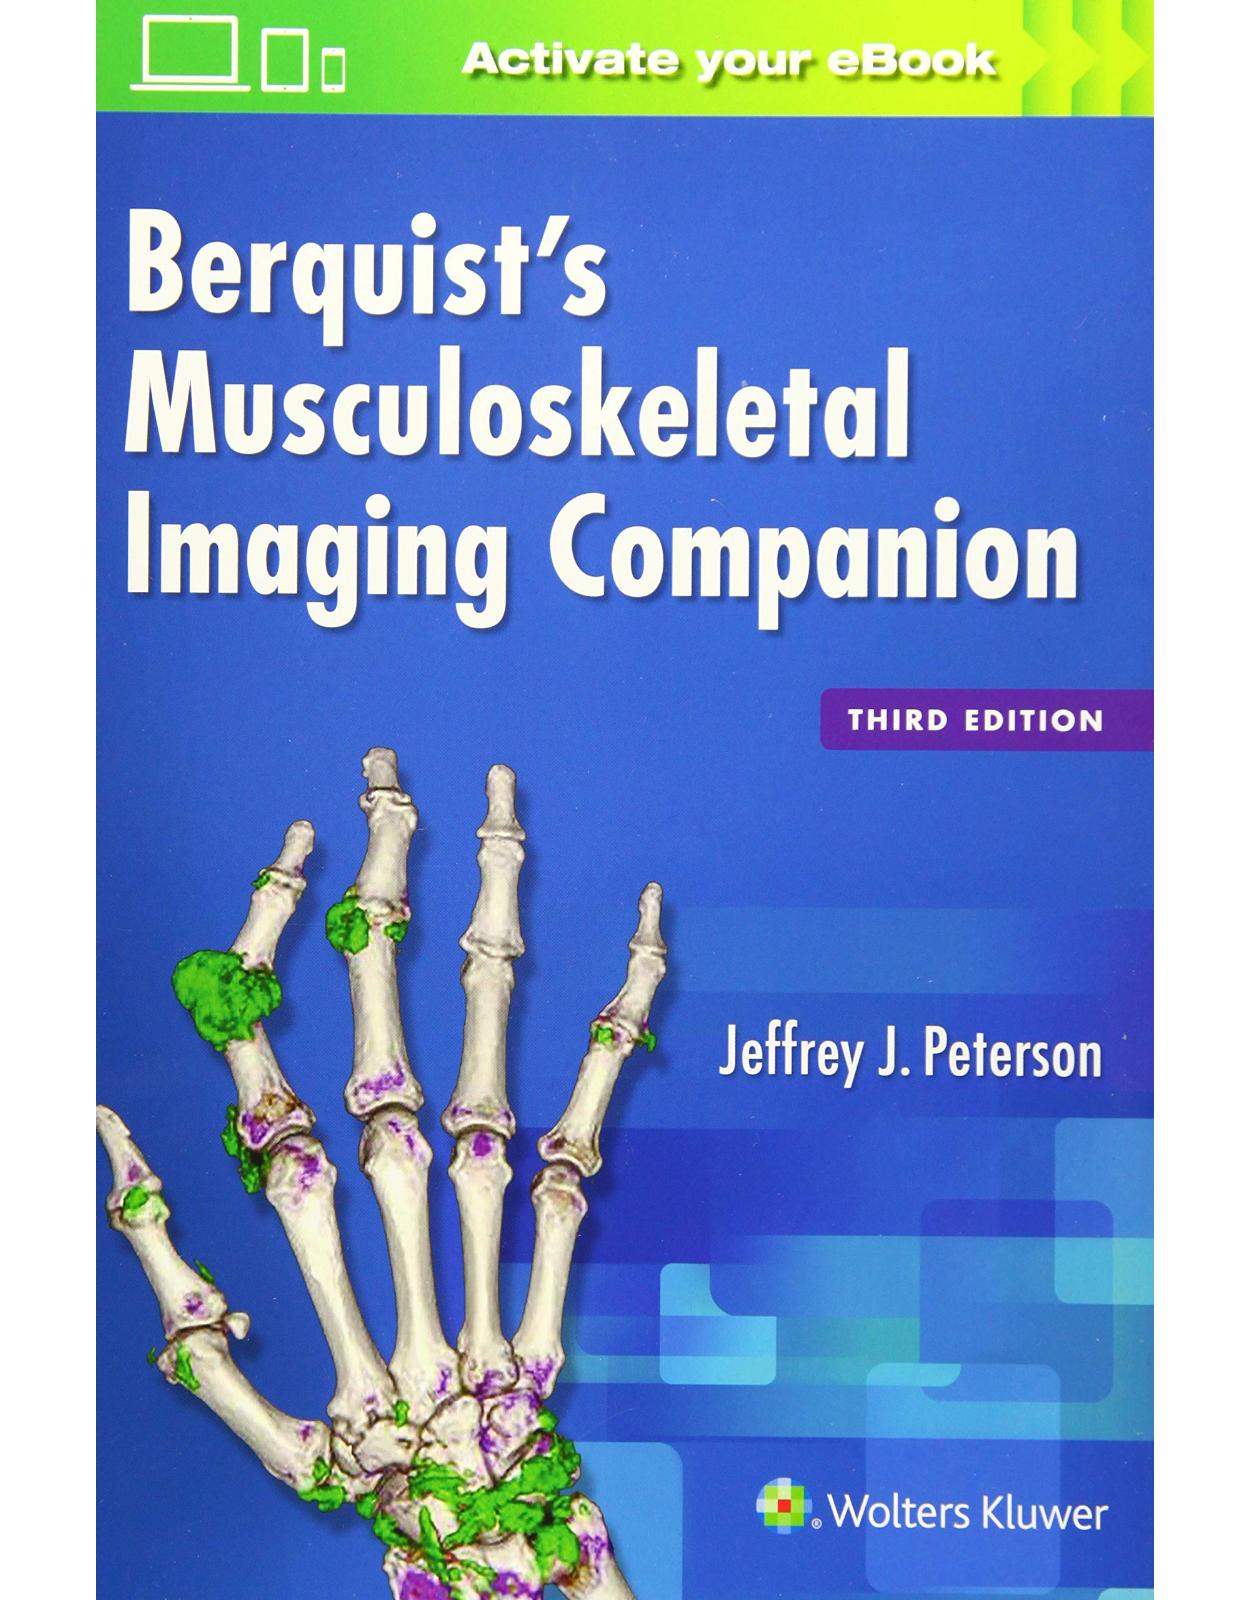 Berquist's Musculoskeletal Imaging Companion